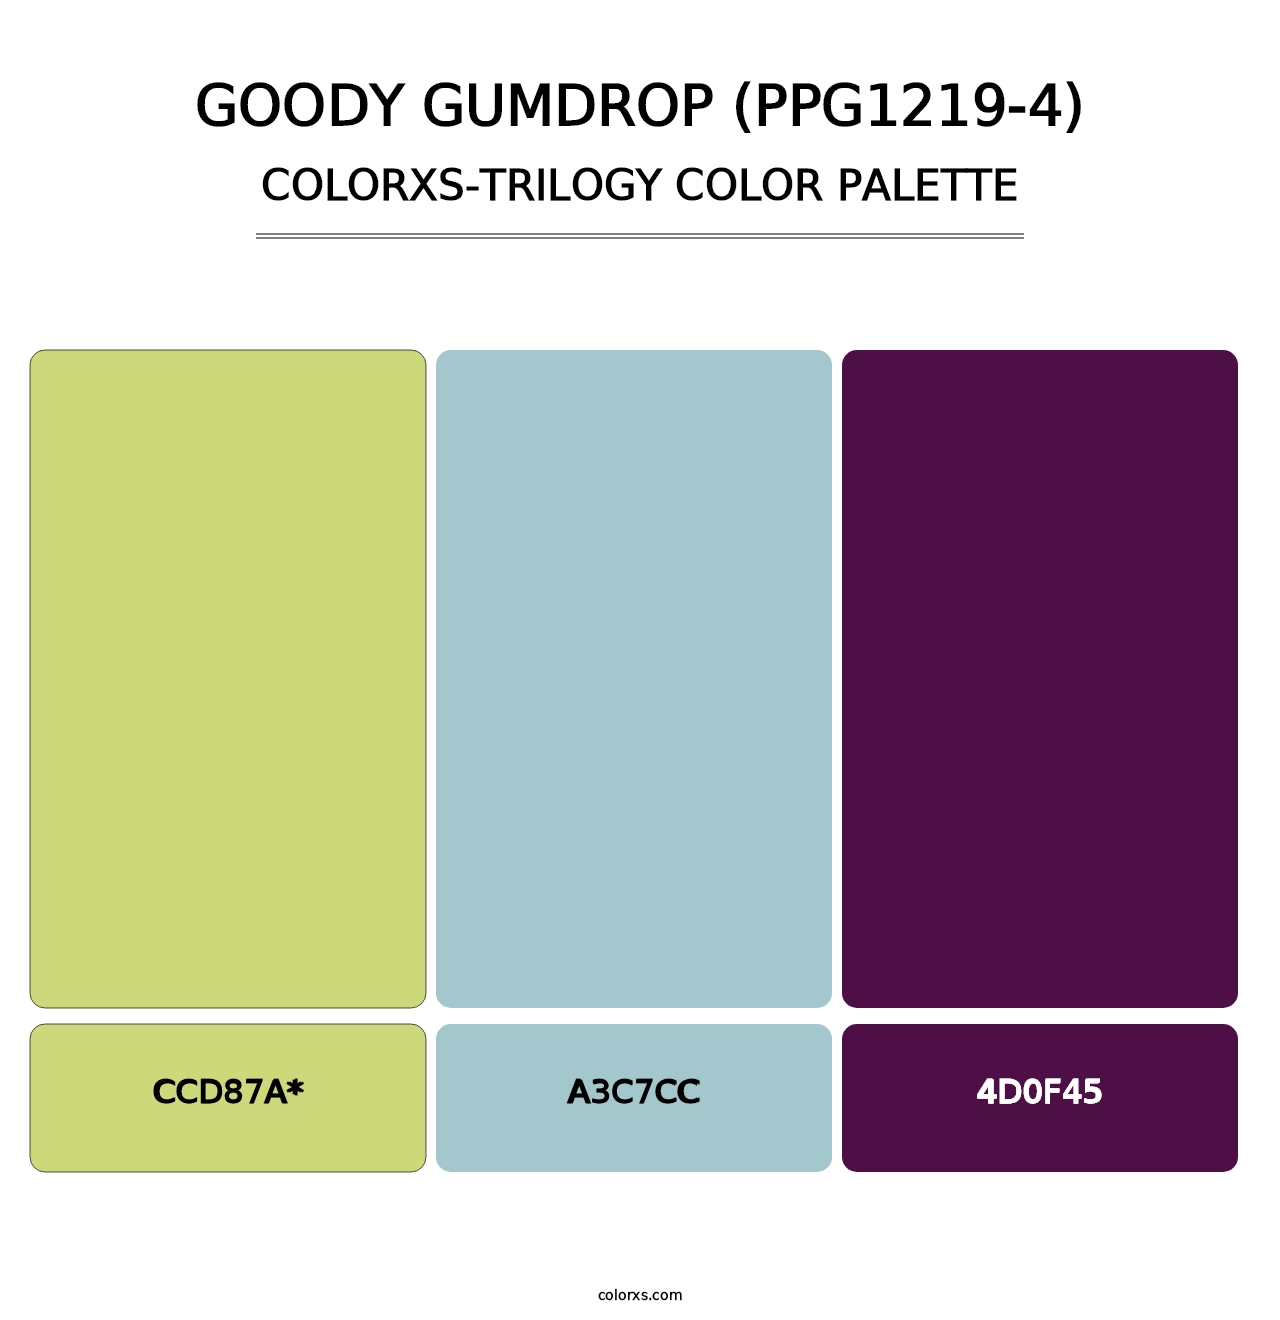 Goody Gumdrop (PPG1219-4) - Colorxs Trilogy Palette